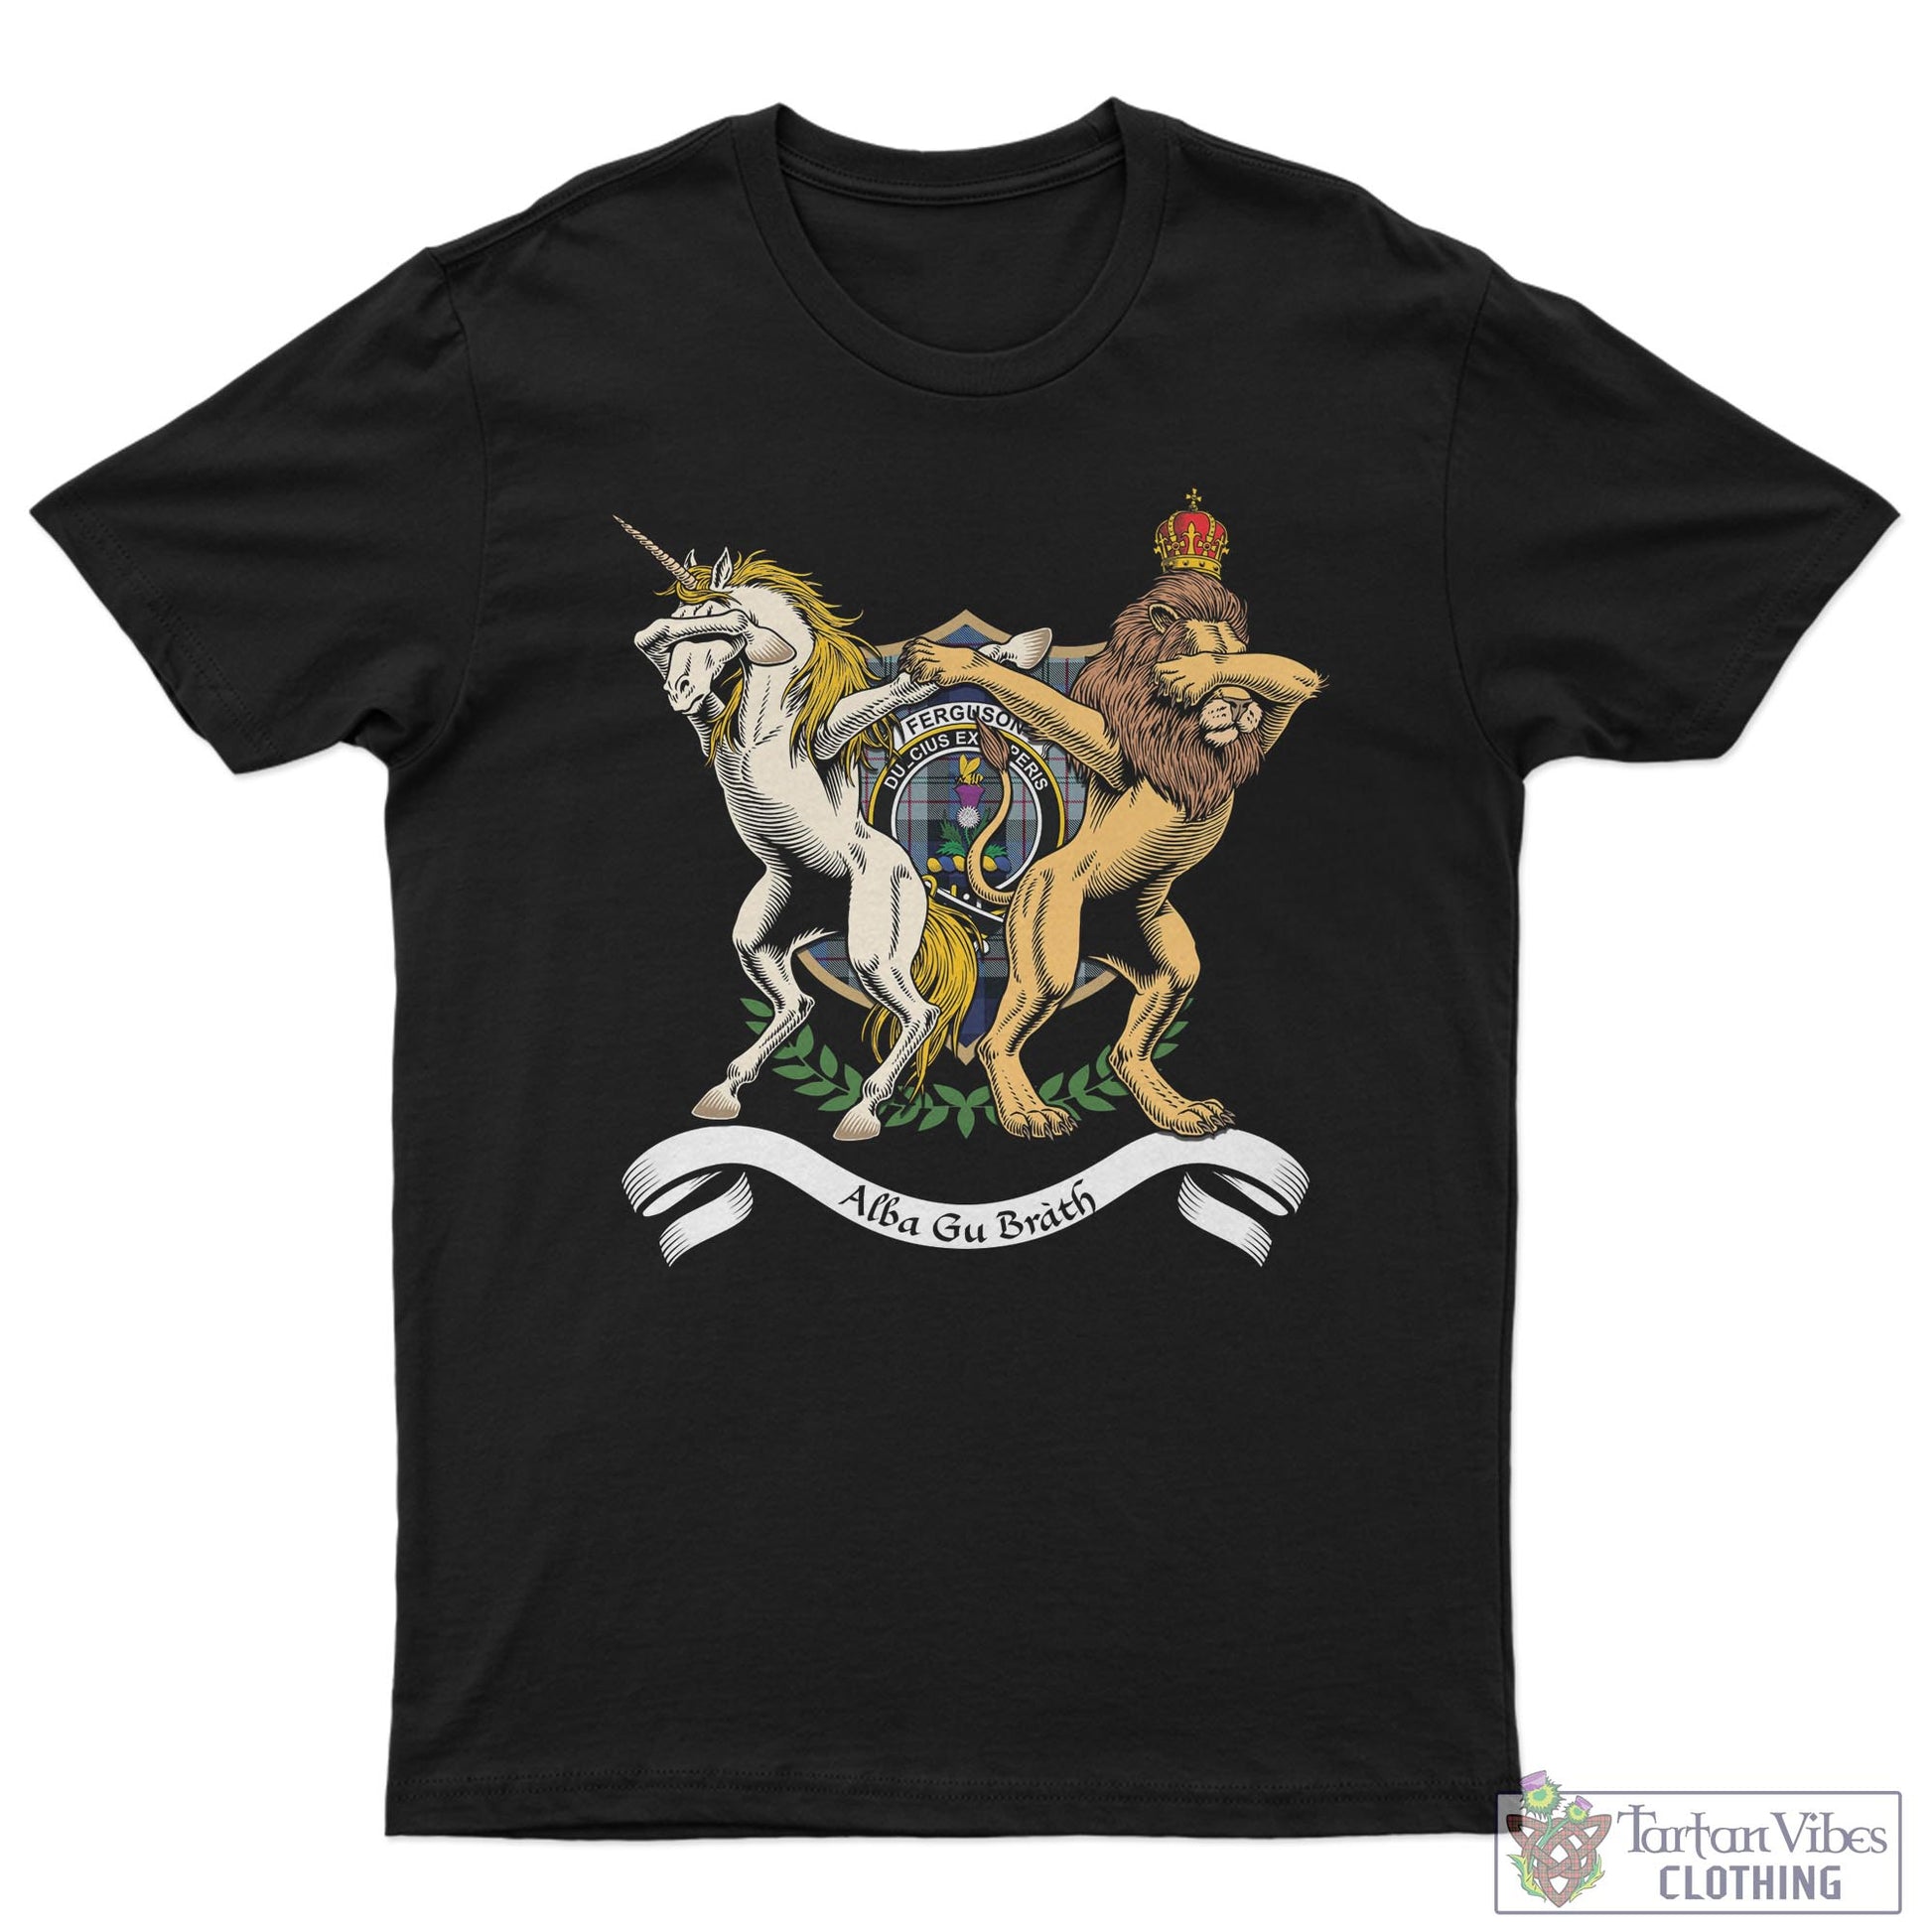 Tartan Vibes Clothing Ferguson Dress Family Crest Cotton Men's T-Shirt with Scotland Royal Coat Of Arm Funny Style